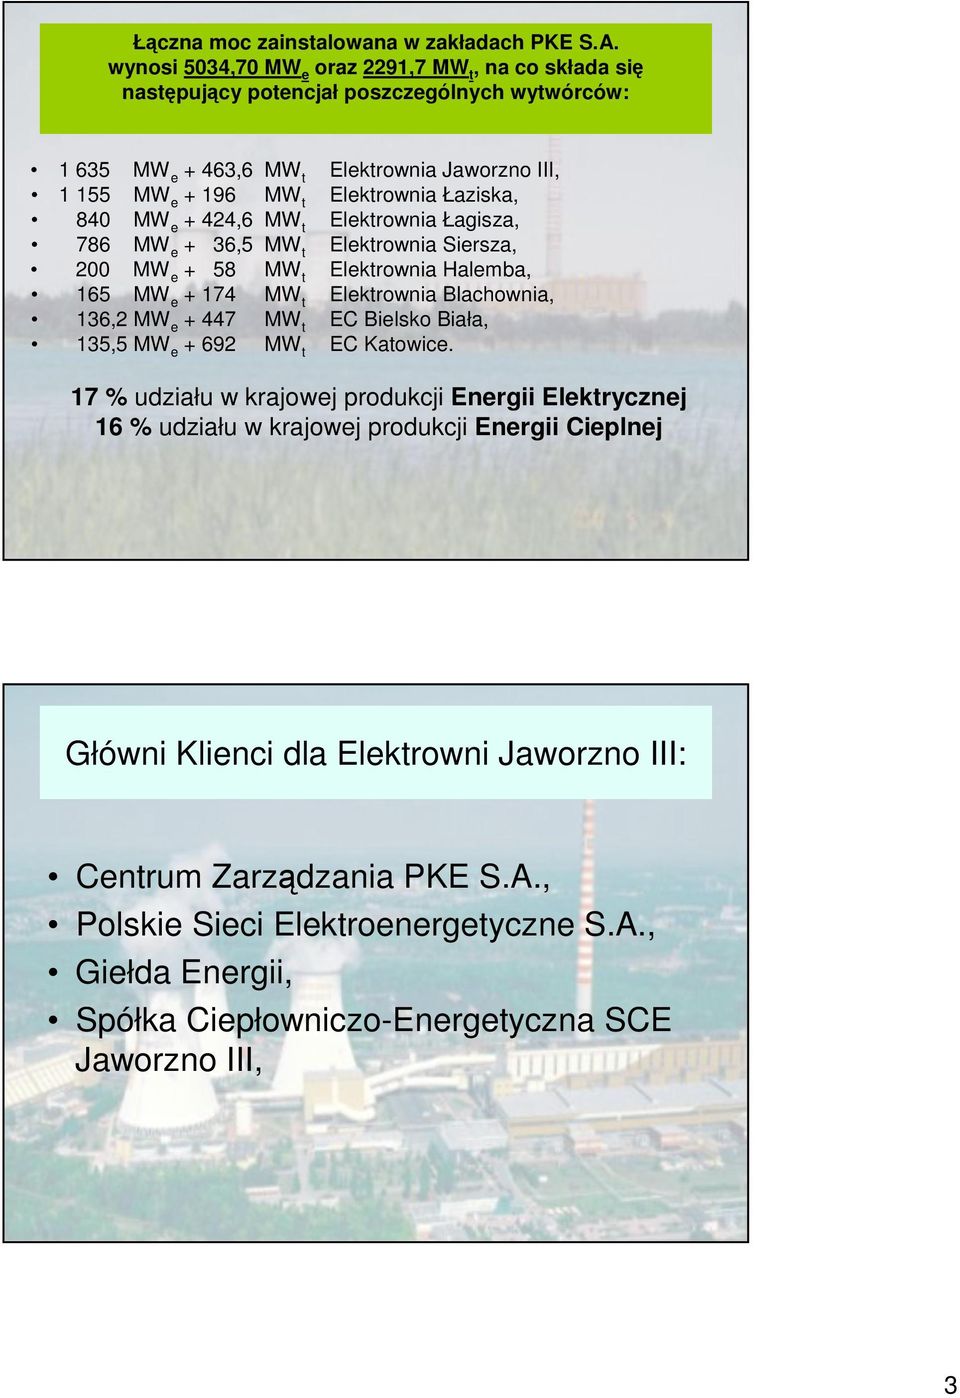 84 MW e + 424,6 MW t Elektrownia Łagisza, 786 MW e + 36,5 MW t Elektrownia Siersza, 2 MW e + 58 MW t Elektrownia Halemba, 165 MW e + 174 MW t Elektrownia Blachownia, 136,2 MW e + 447 MW t EC